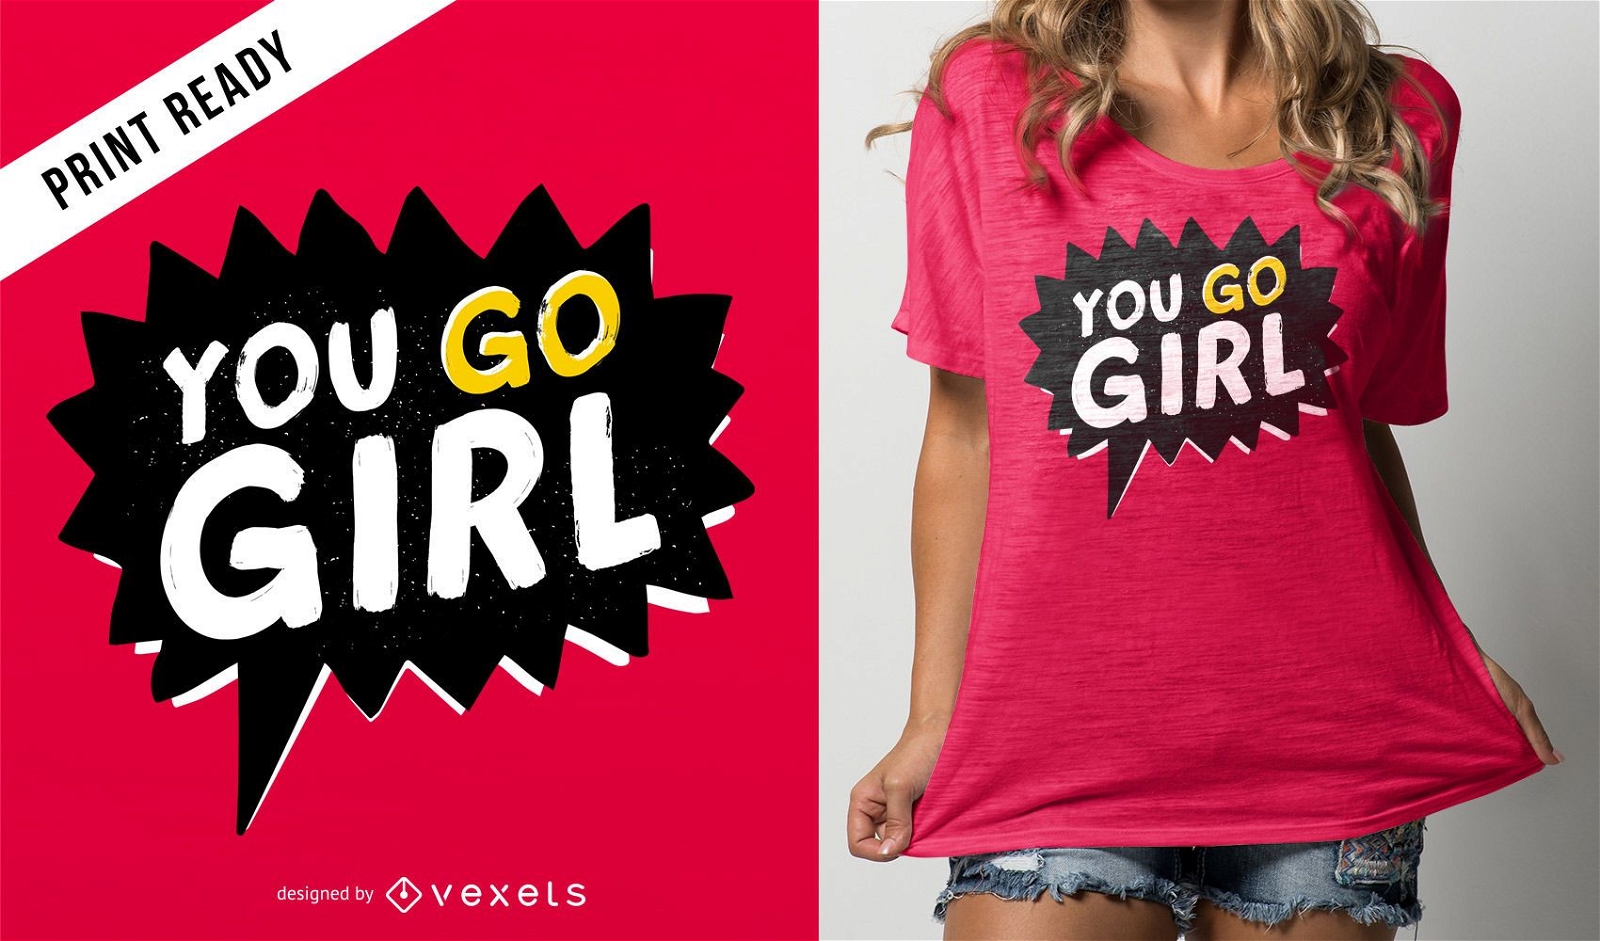 You go girl t-shirt design